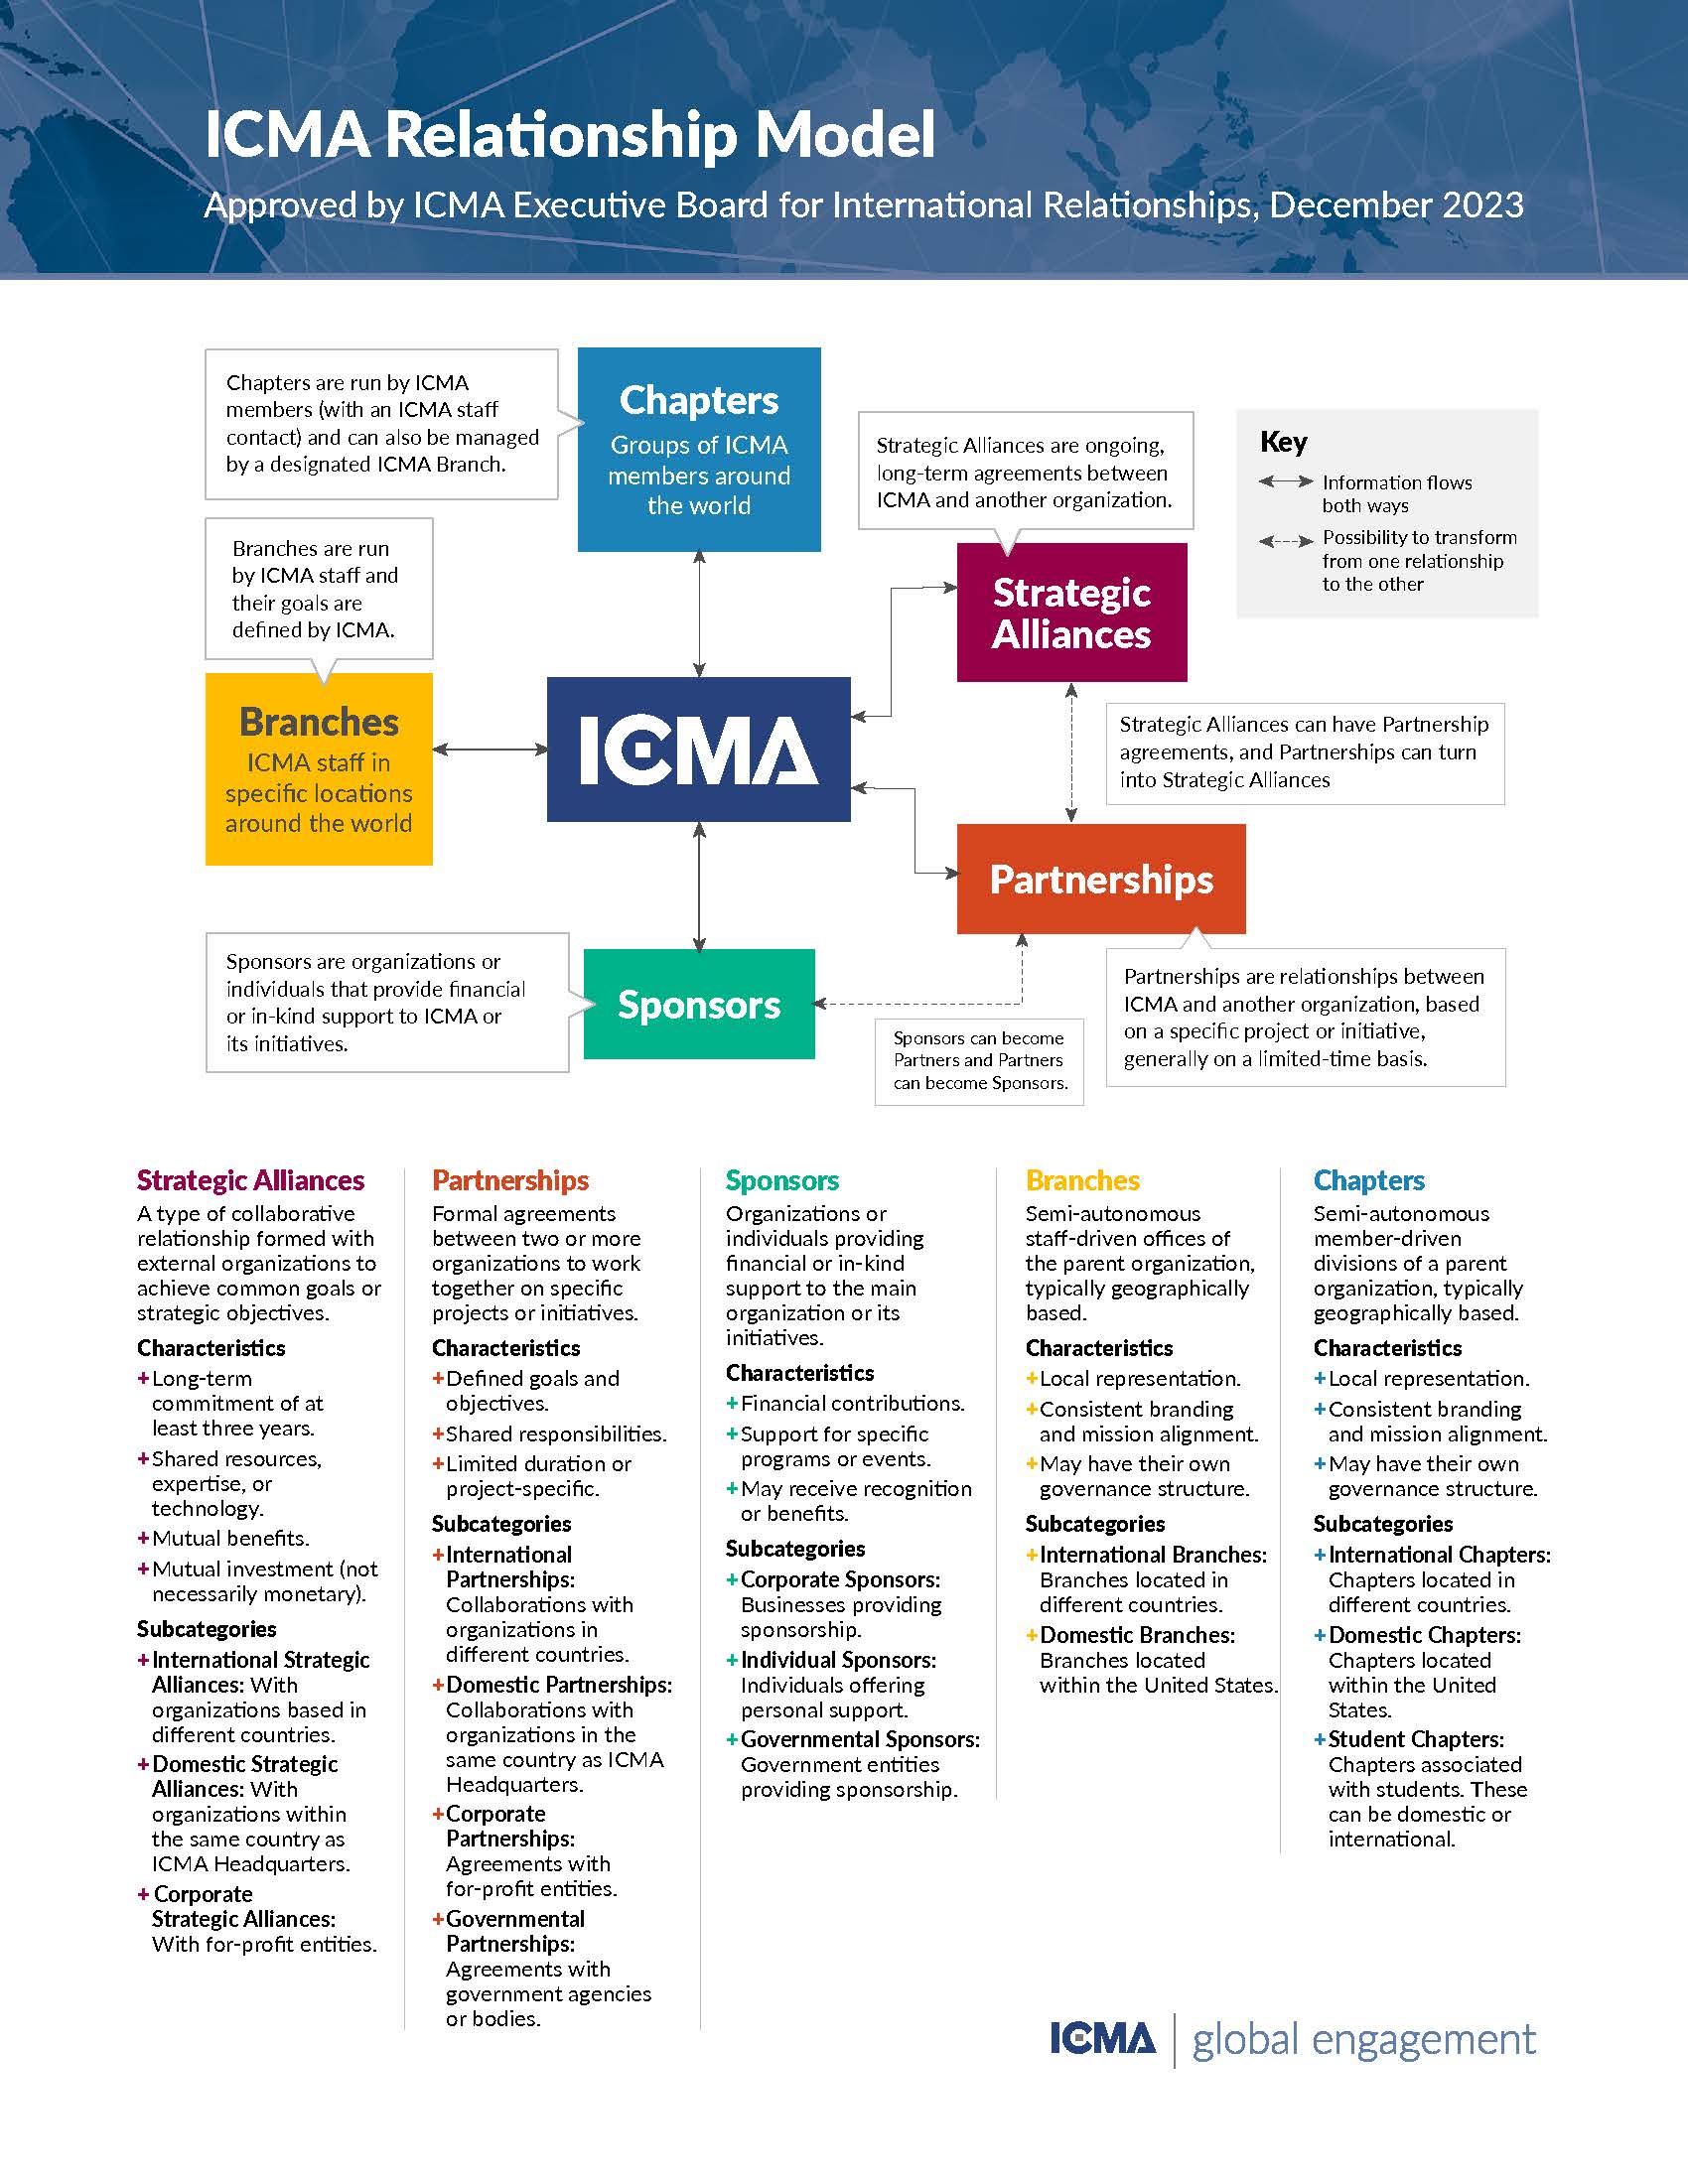 ICMA Relationship Model Graphic 